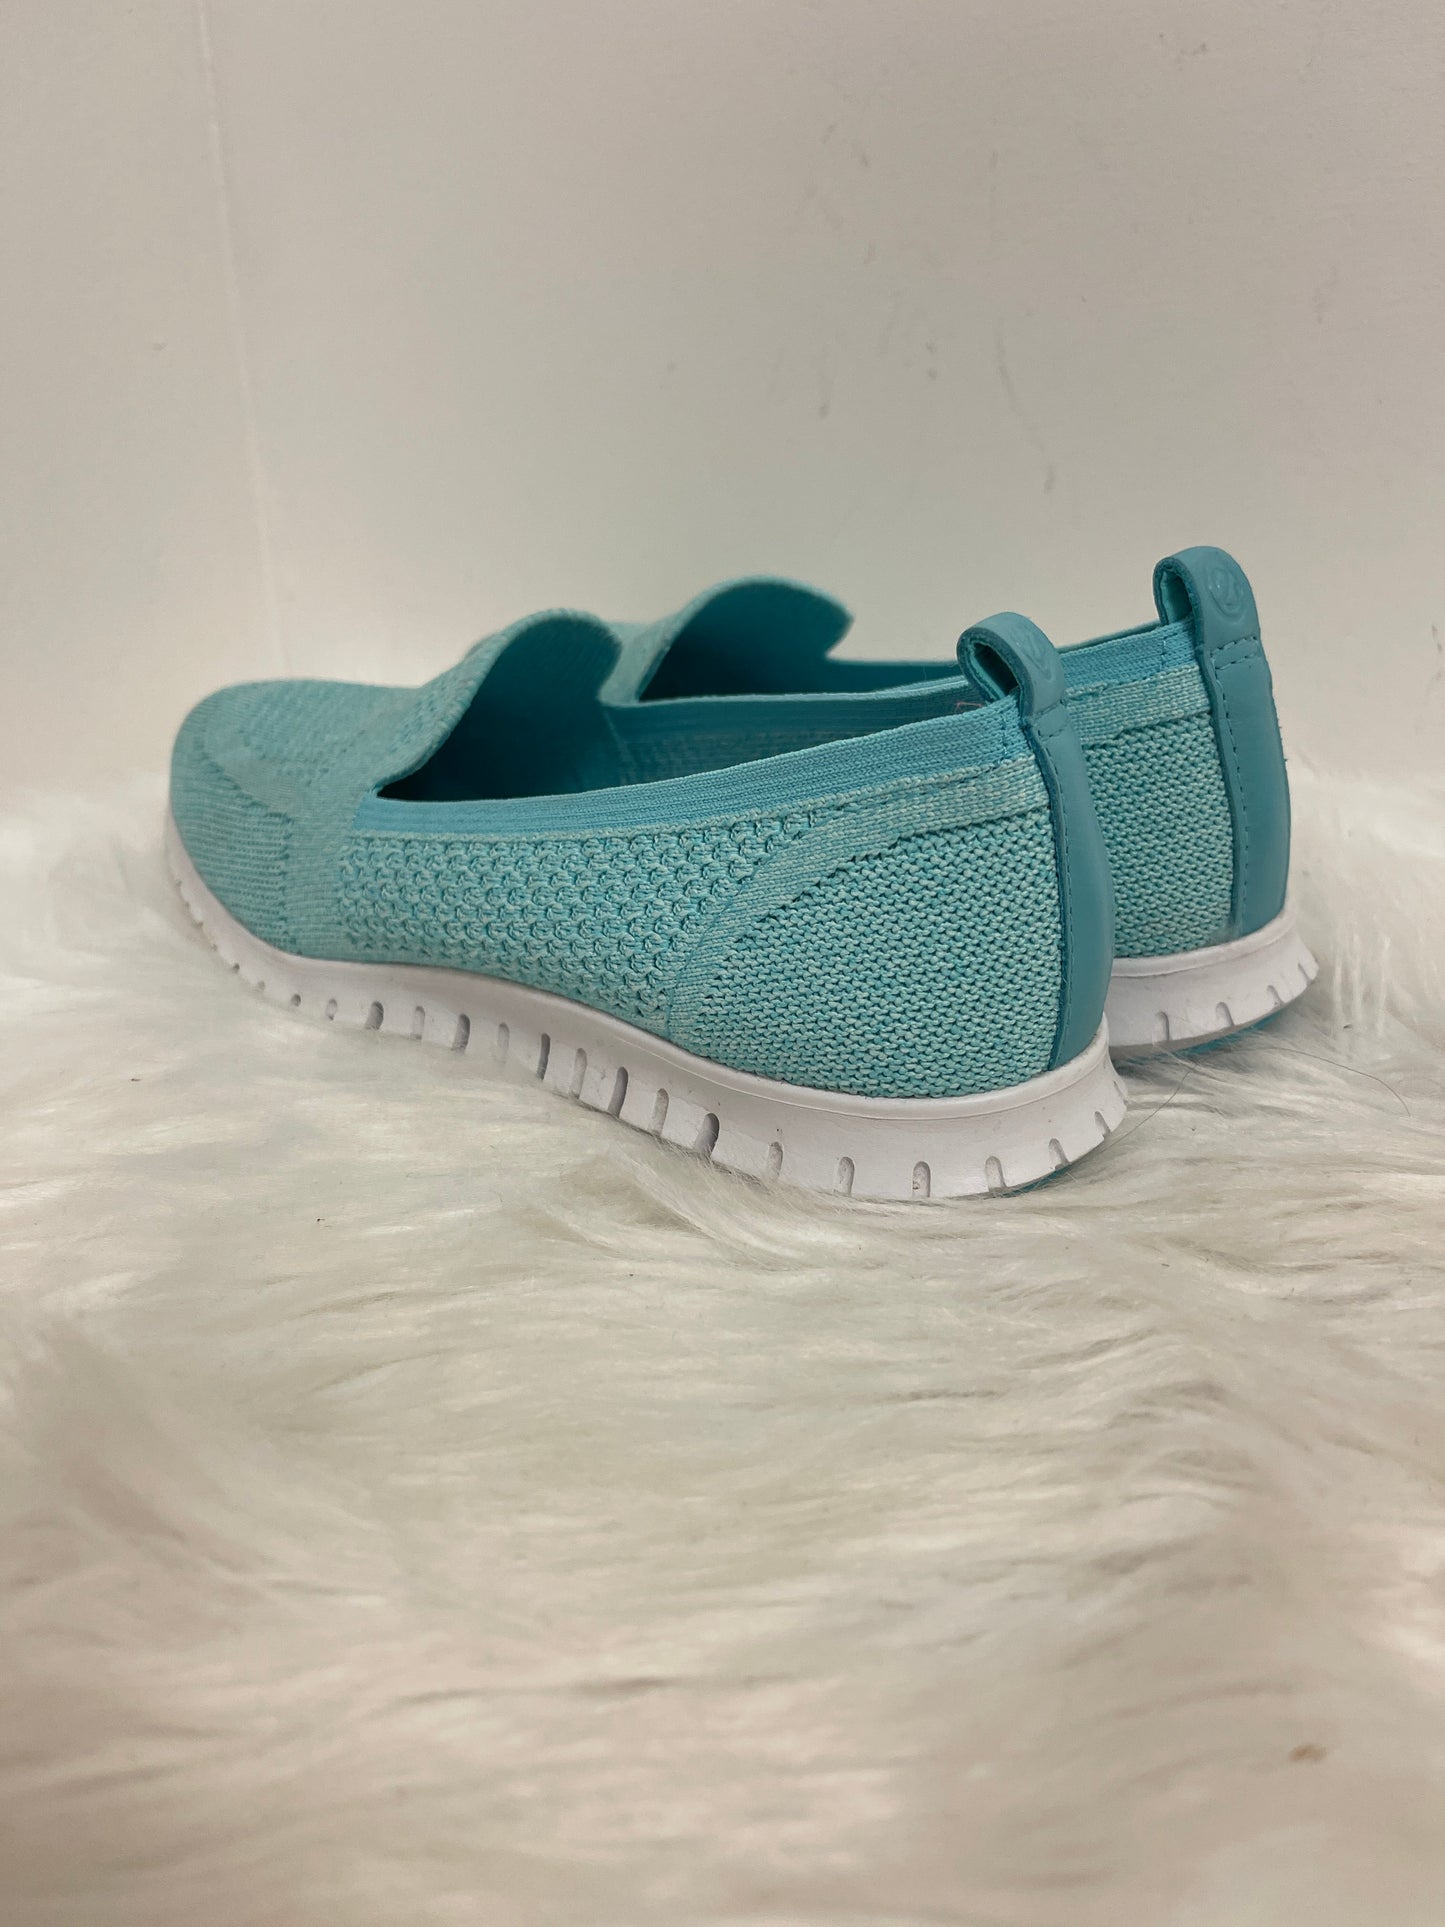 Blue Shoes Flats Cole-haan, Size 8